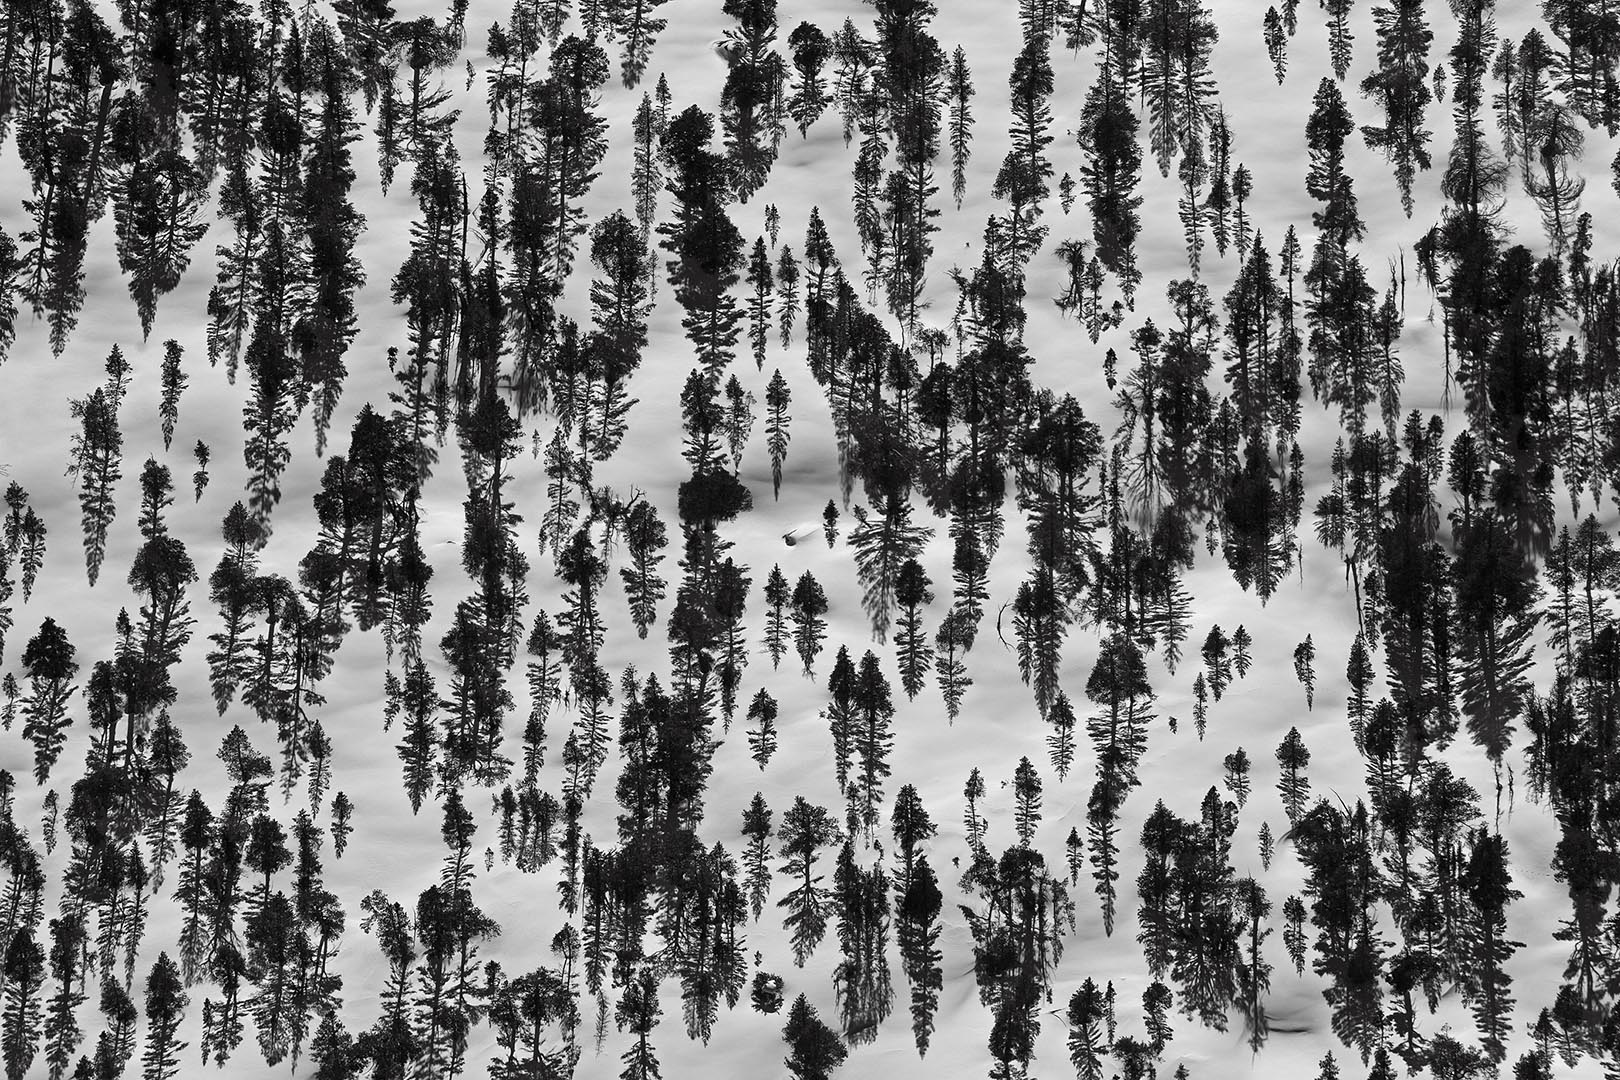 Pines and Snow, near Gem Lake